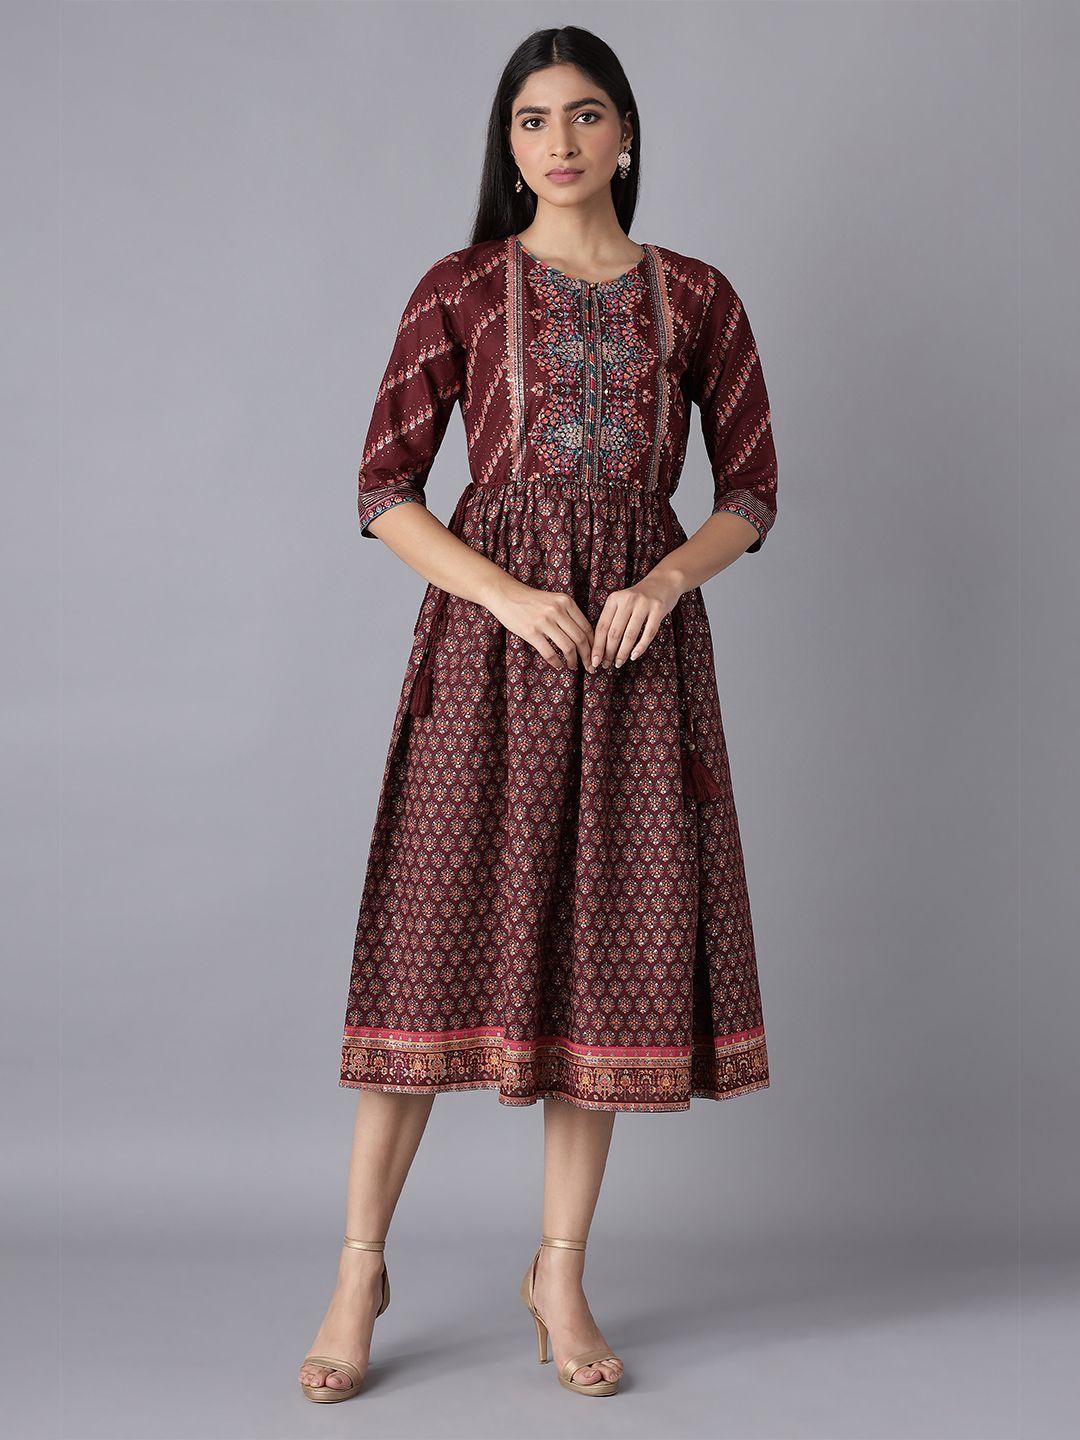 w maroon ethnic motifs ethnic midi dress